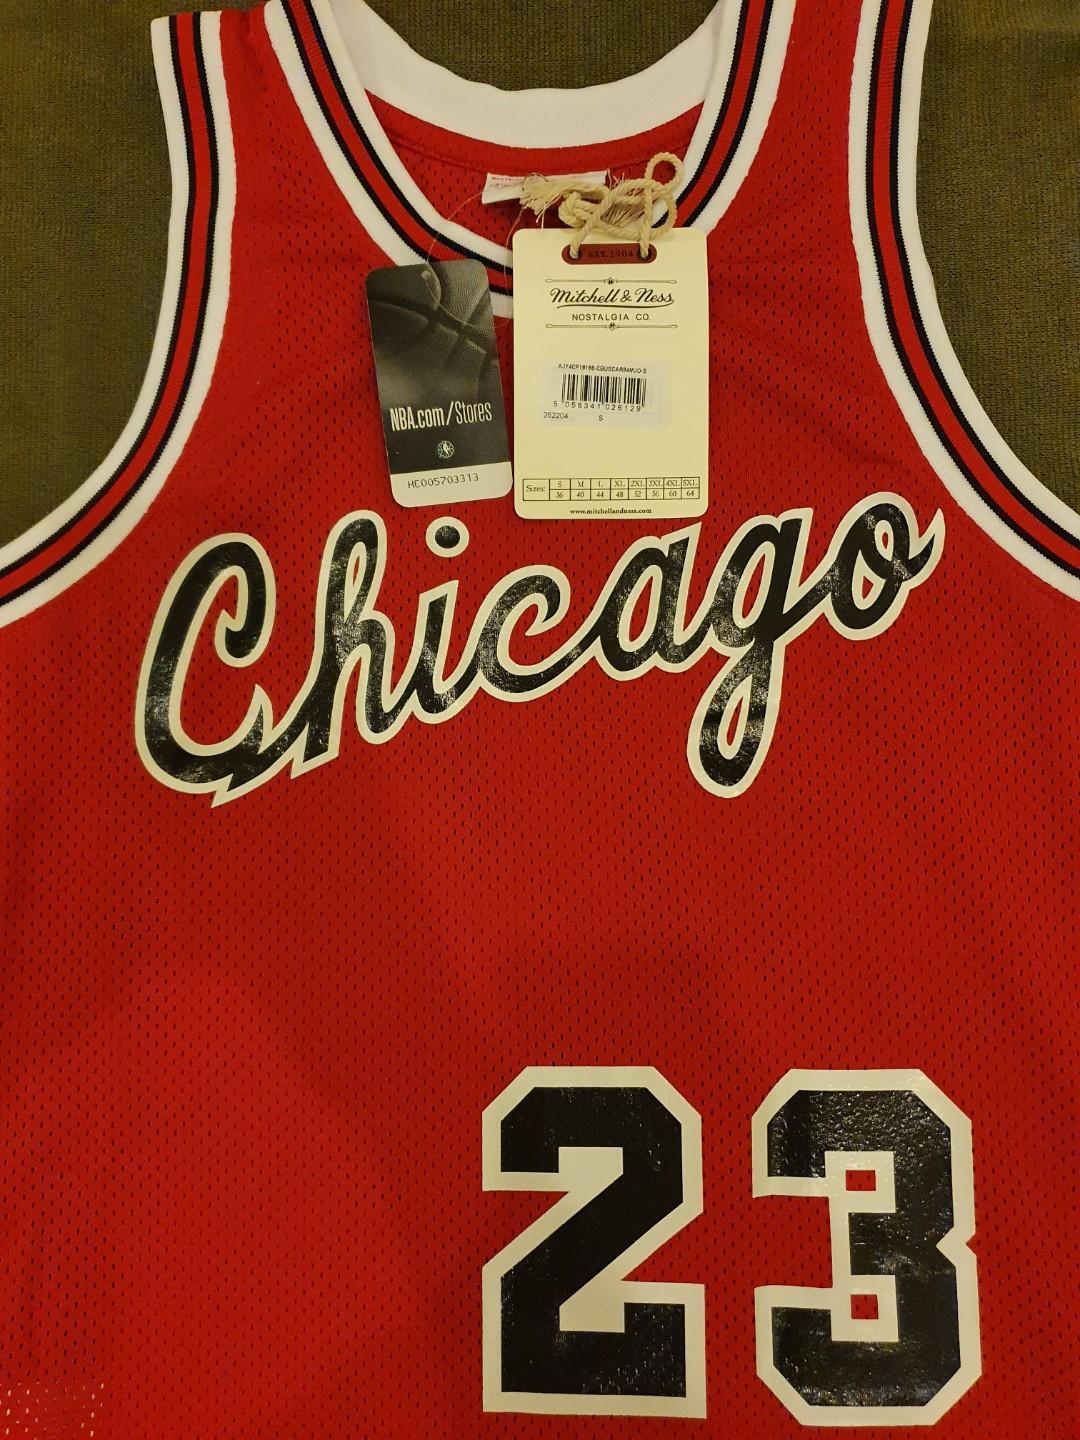 Mitchell & Ness NBA Authentic Jersey Chicago Bulls 1984-85 Michael Jordan #23 Jerseys & Team Gear Red in size:M-10/12